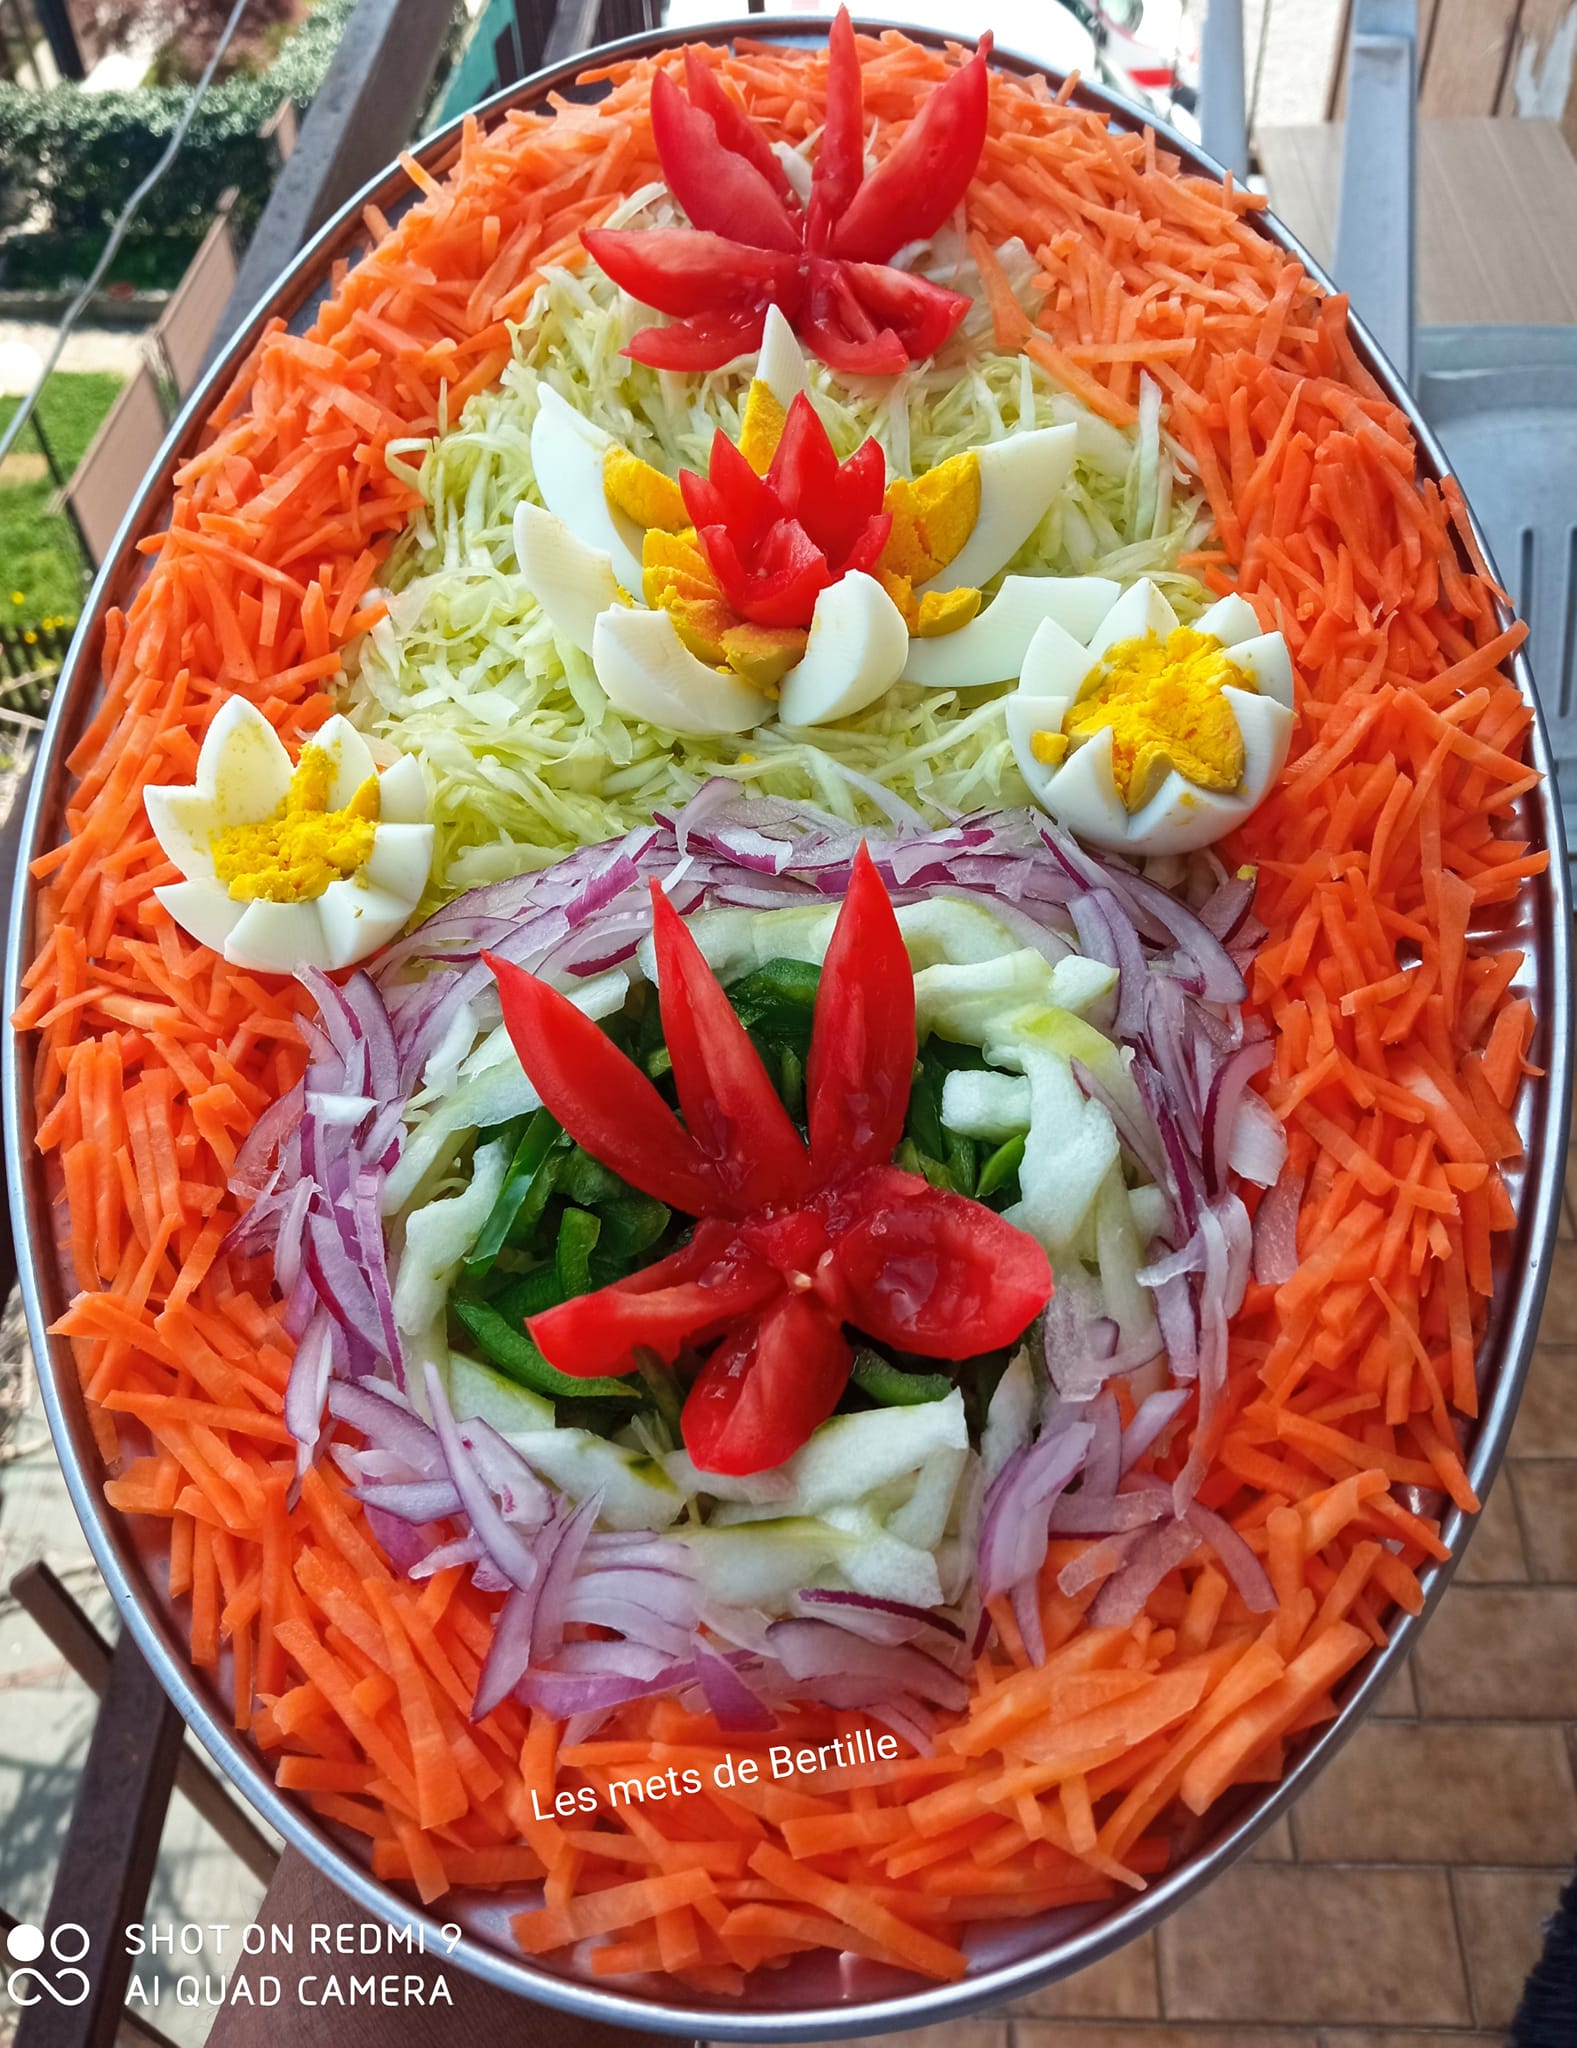 Decoration Salade pas cher - Achat neuf et occasion | Rakuten